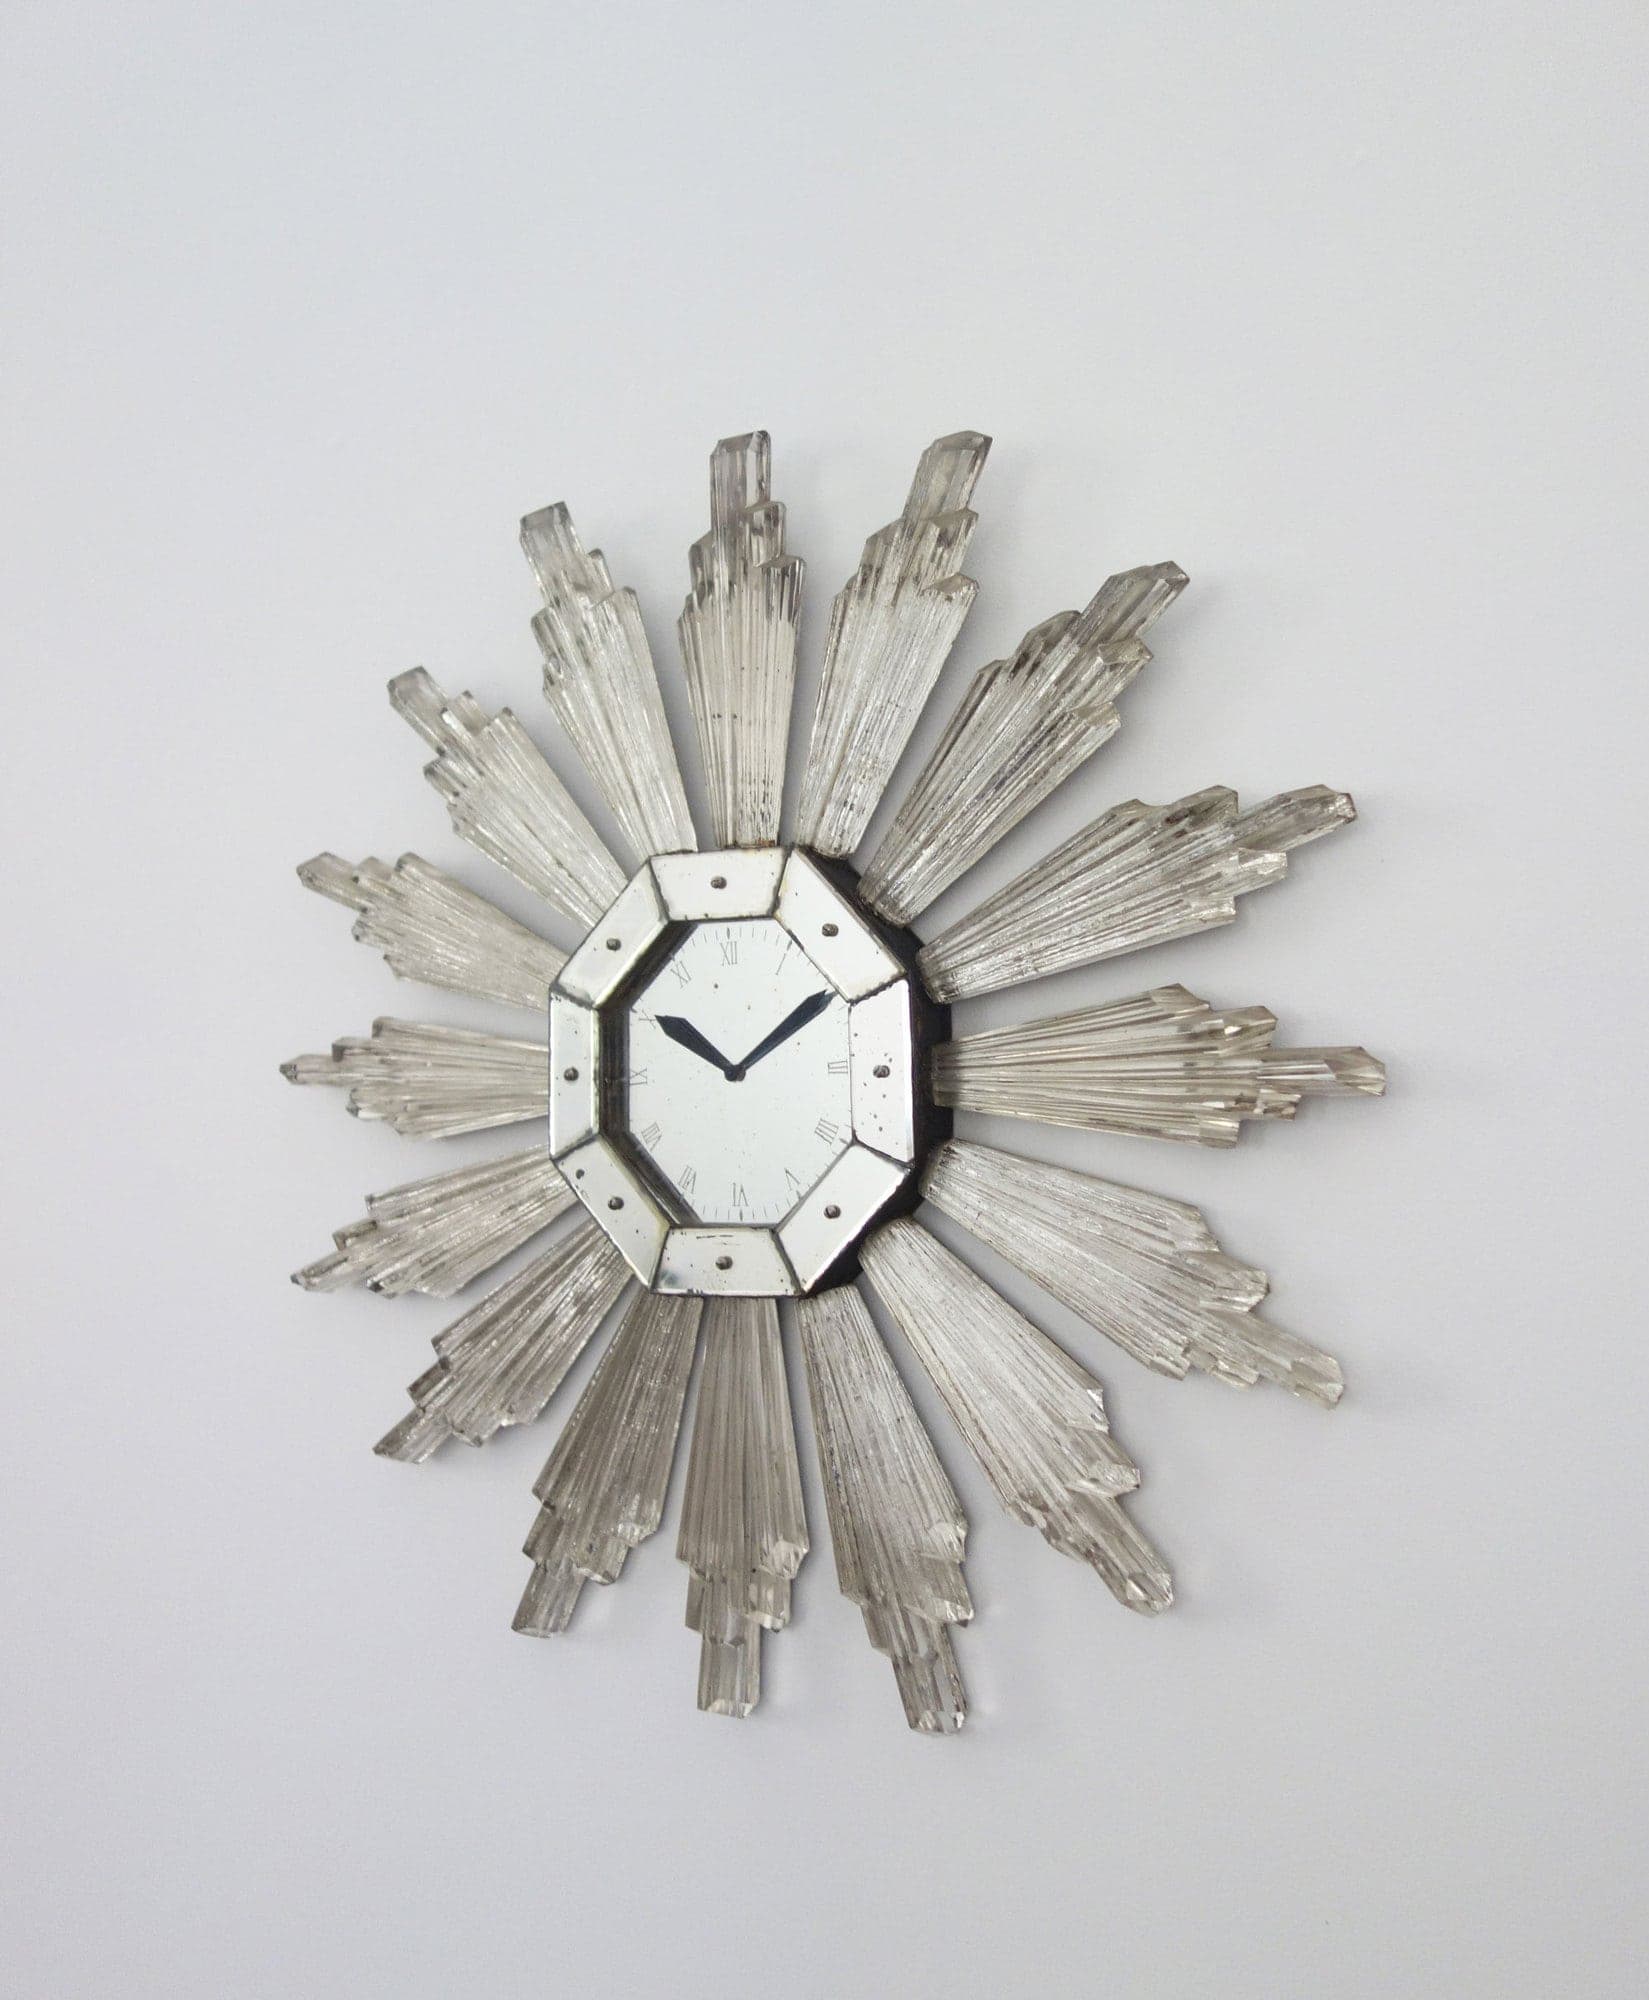 Serge Roche, Very rare wall clock (sold), vue 02